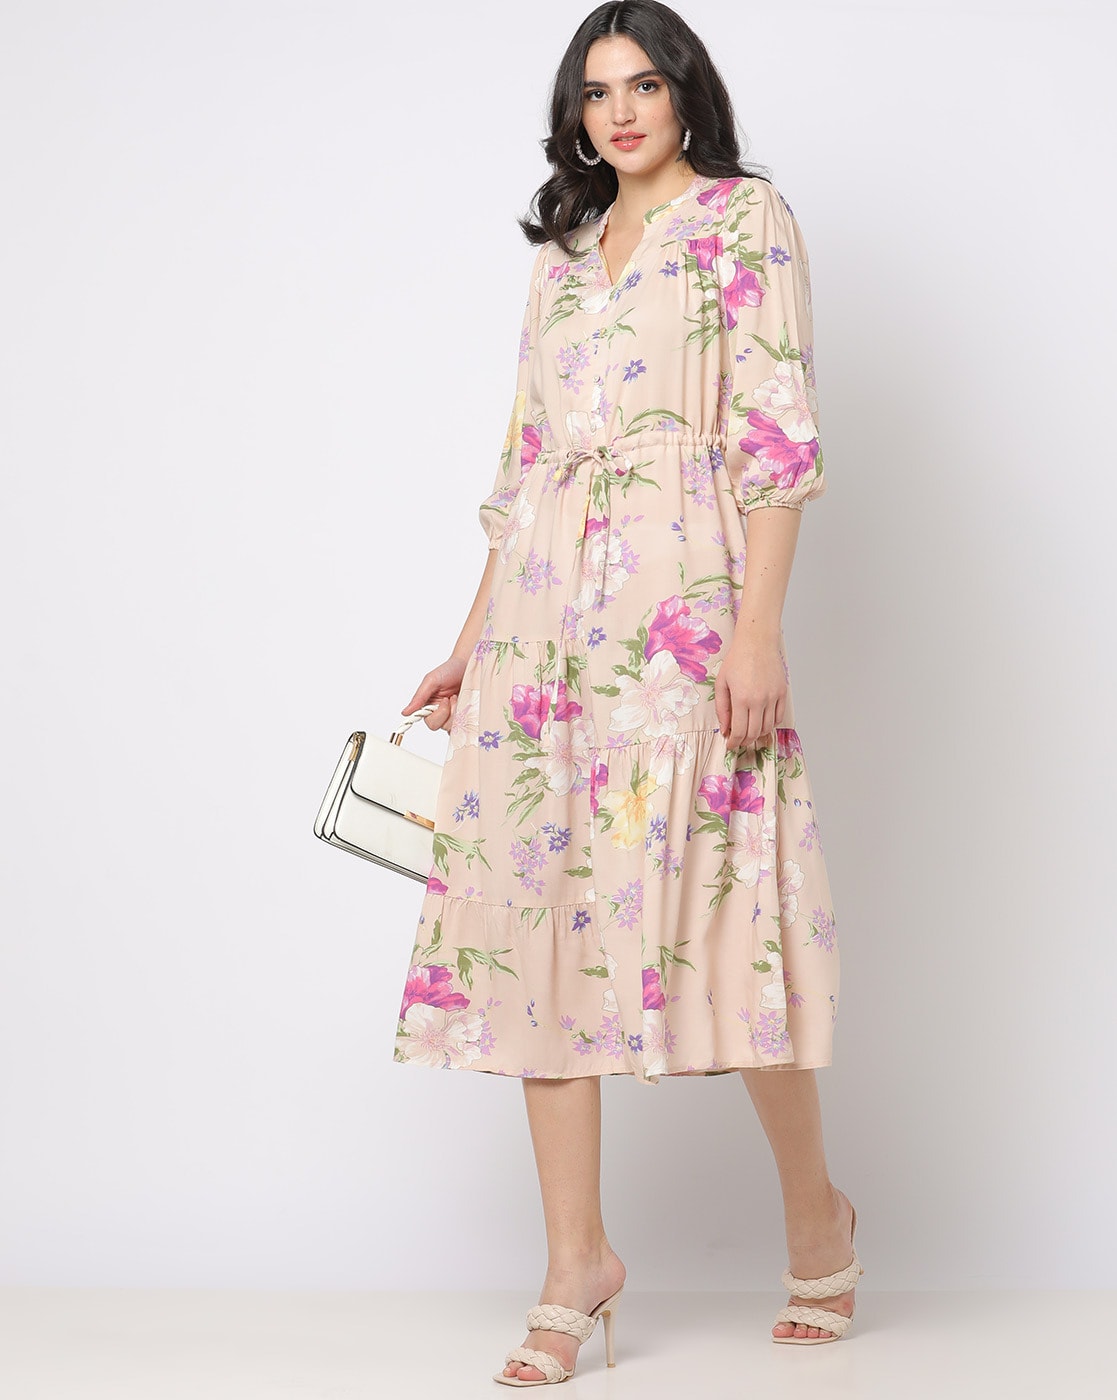 Buy Off-White & Pink Dresses for Women by AJIO Online | Ajio.com